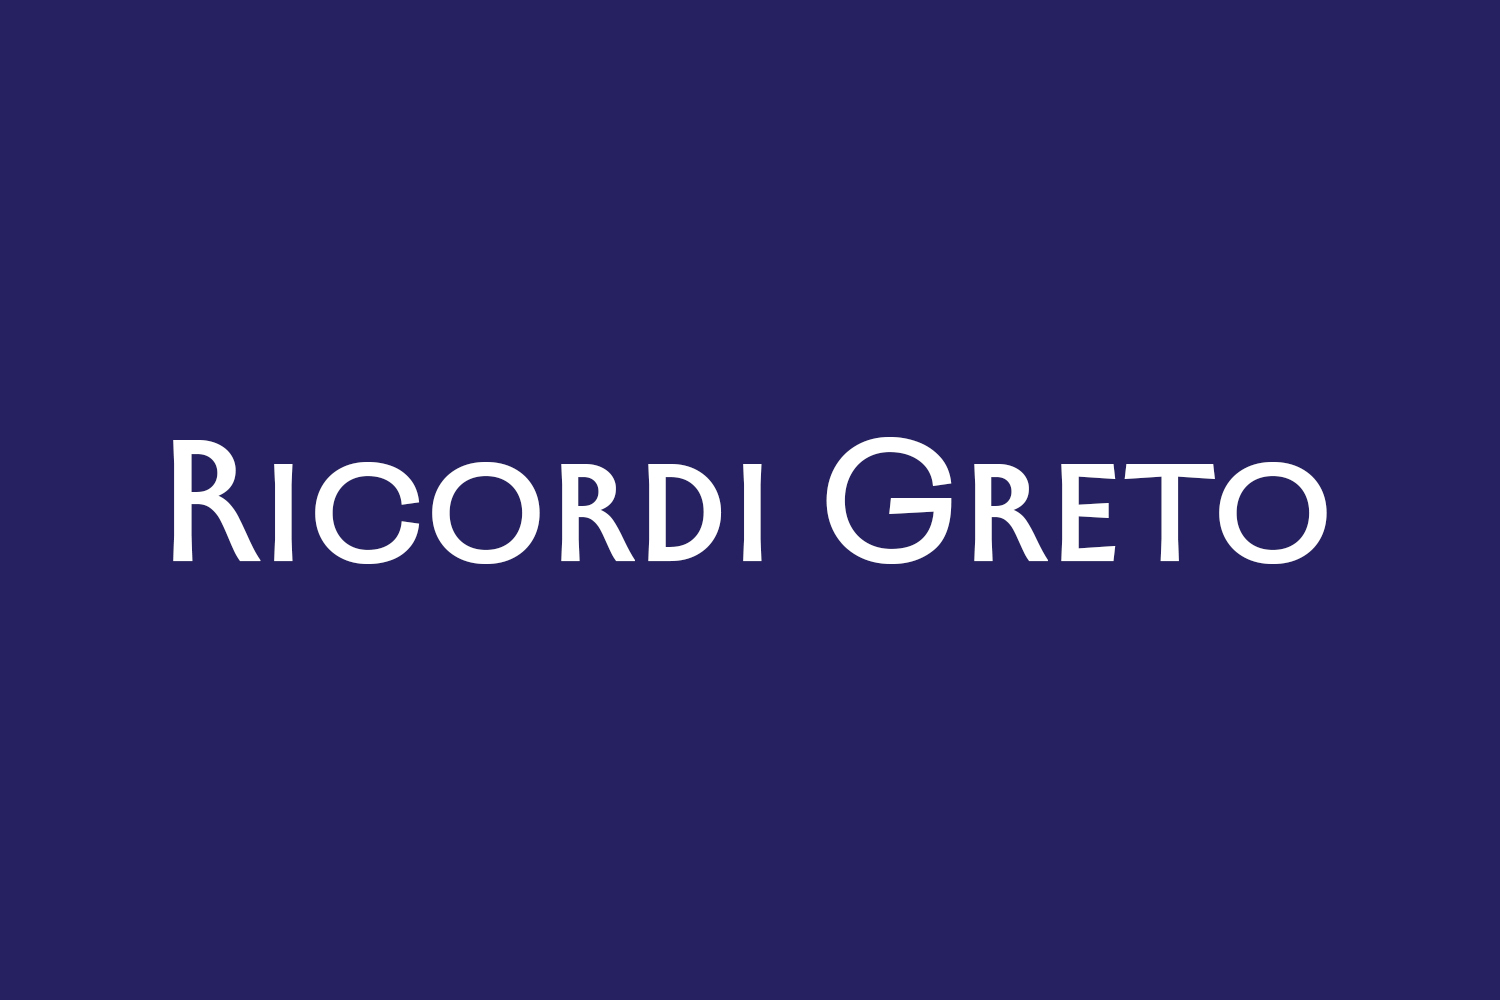 Ricordi Greto Free Font